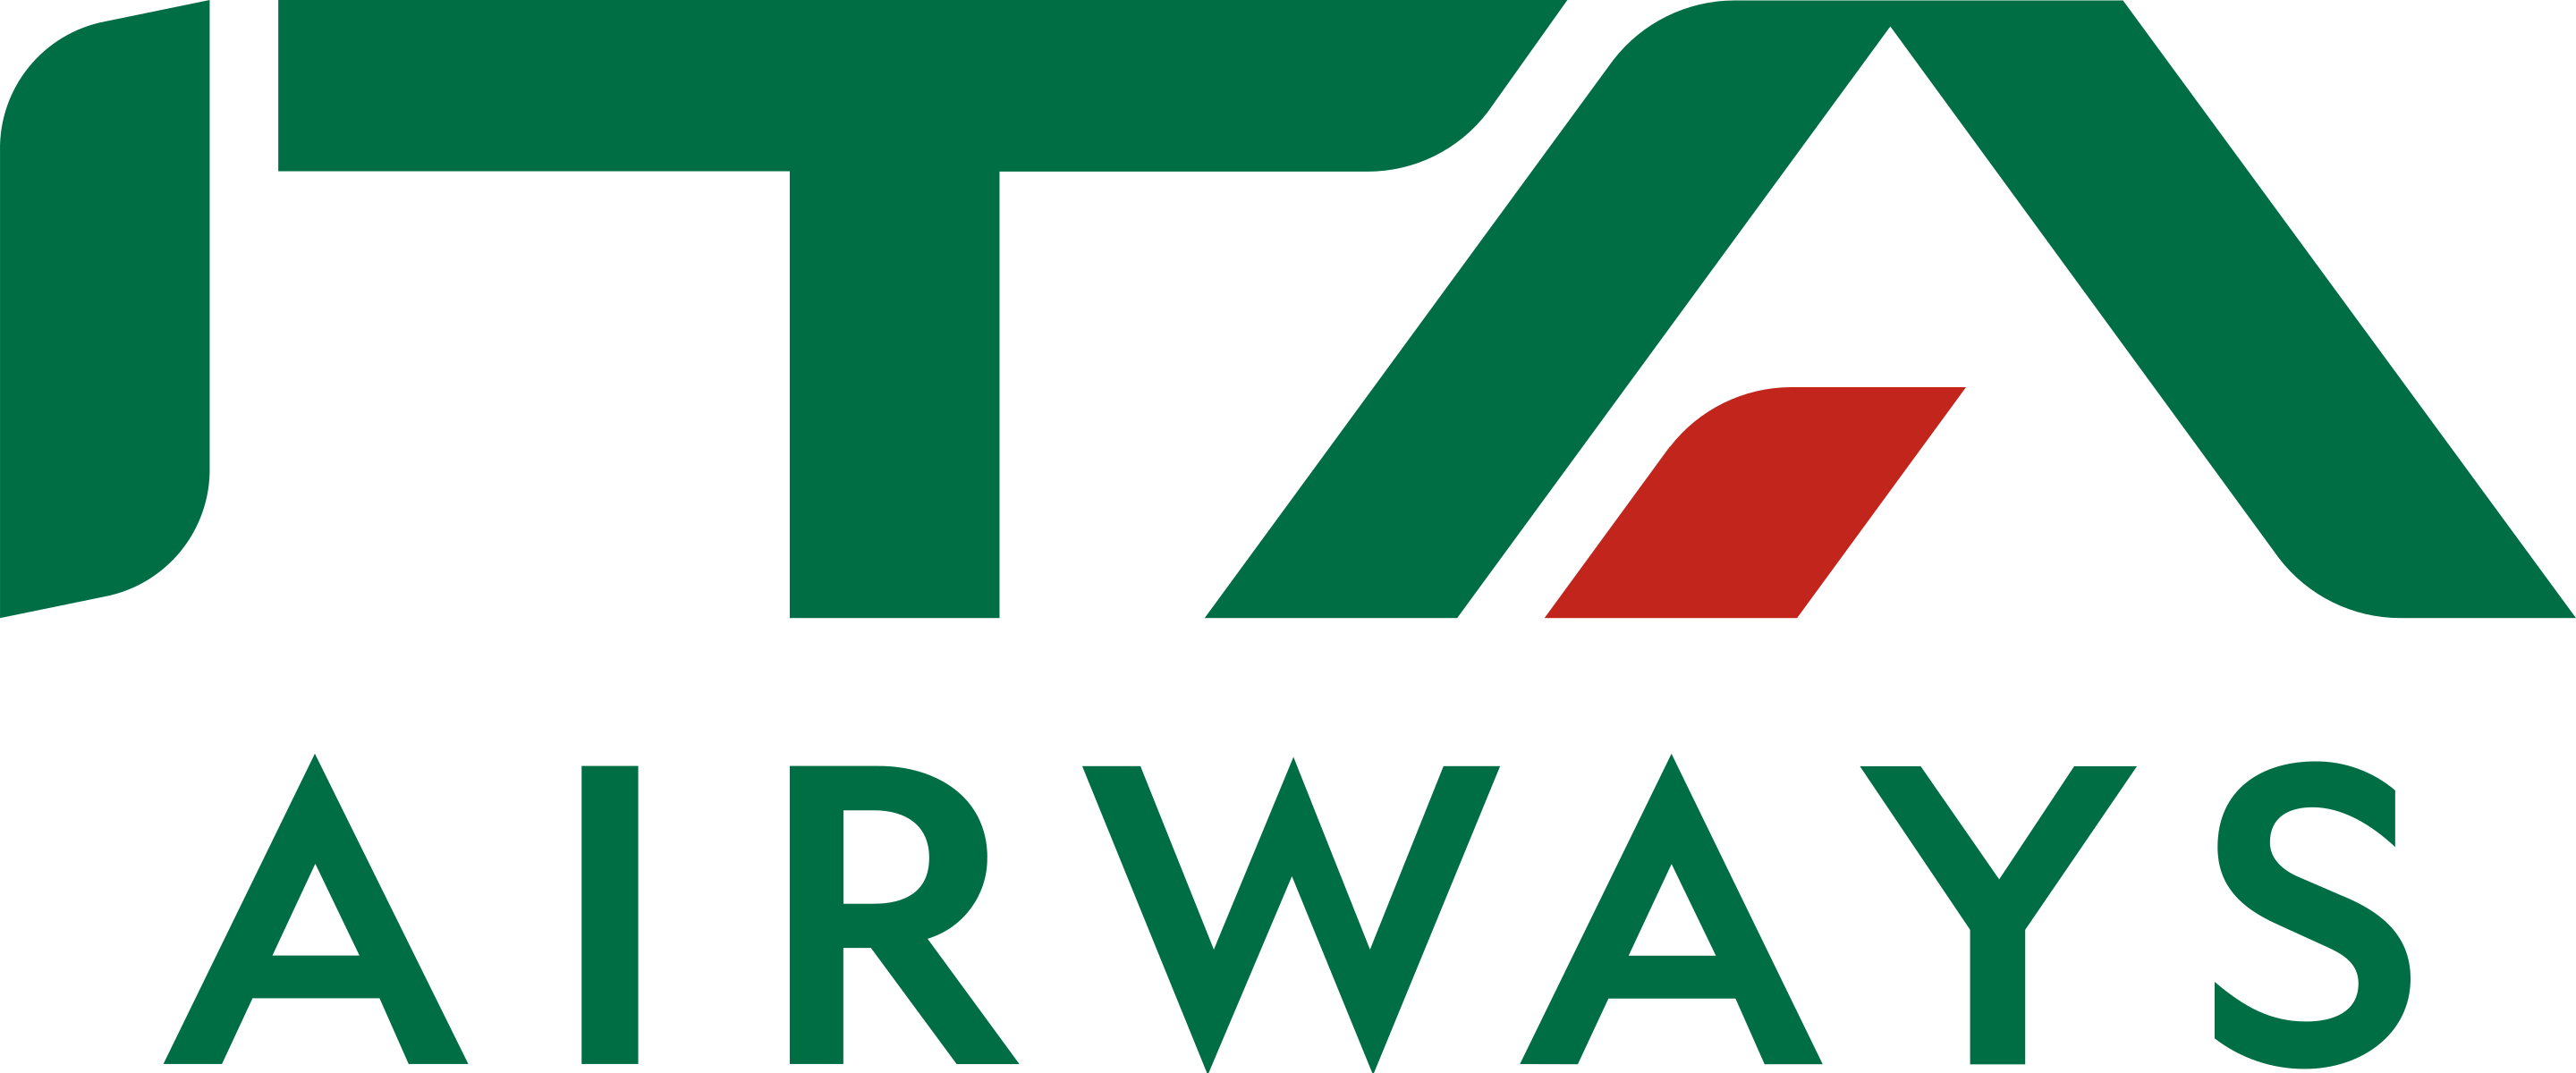 Italia Trasporto Aereo S.p.A. Logo